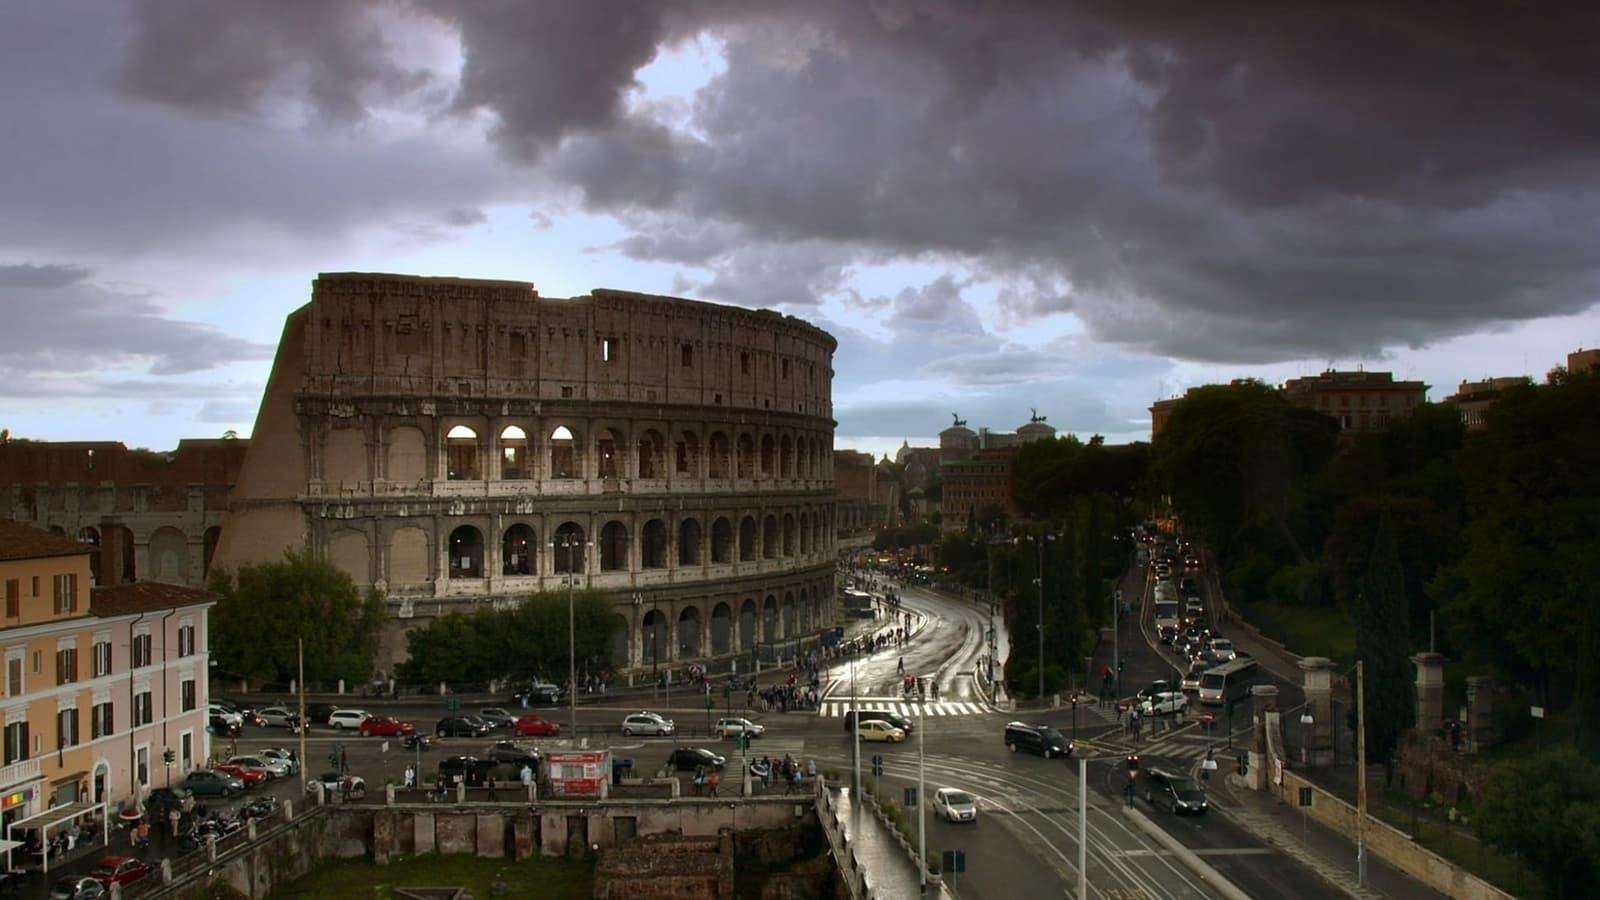 The Secrets of the Colosseum backdrop